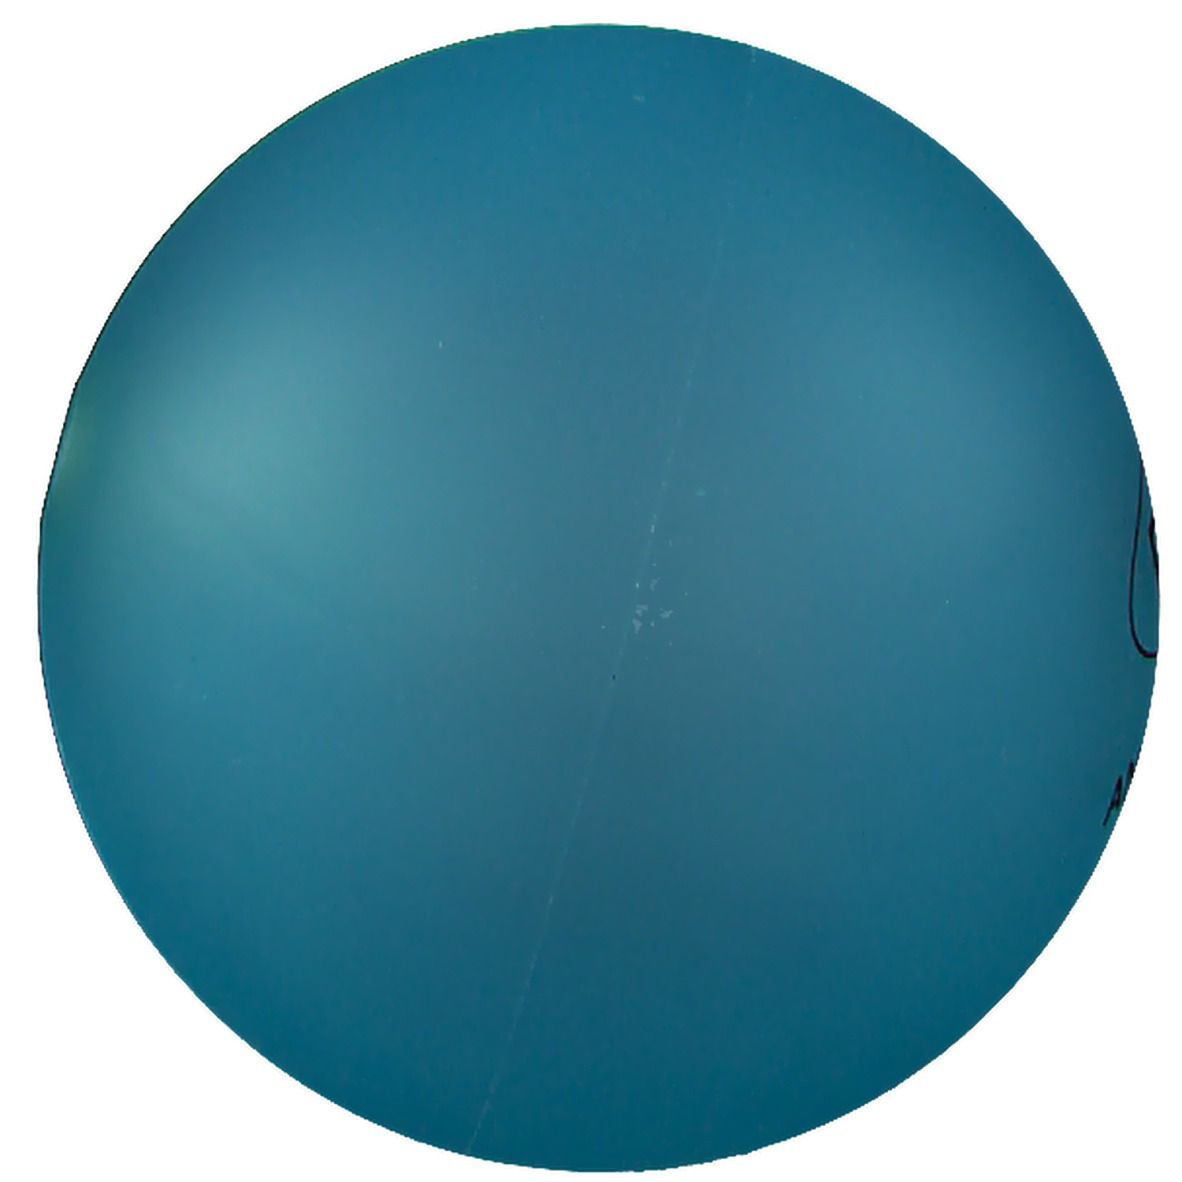 Rehaforum® Anti-Stress Ball (Farbe nicht wählbar)